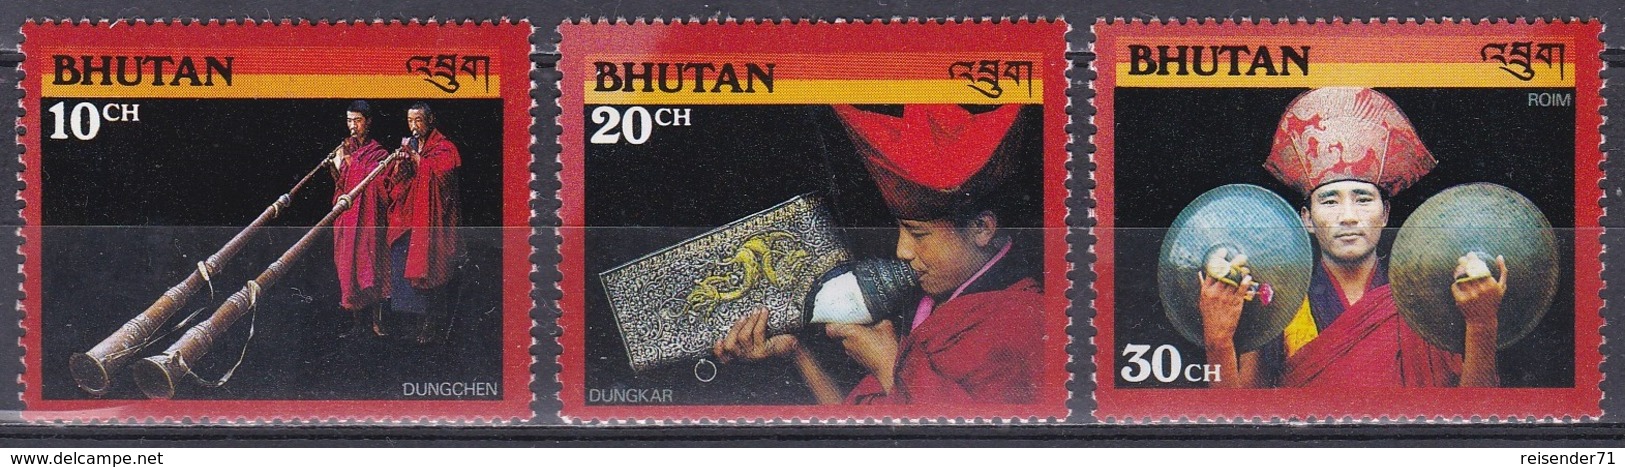 Bhutan 1990 Religion Kunst Arts Kultur Culture Musikinstrumente Musik Music Dungchen Dungkar Roim, Aus Mi. 1339-6 ** - Bhutan